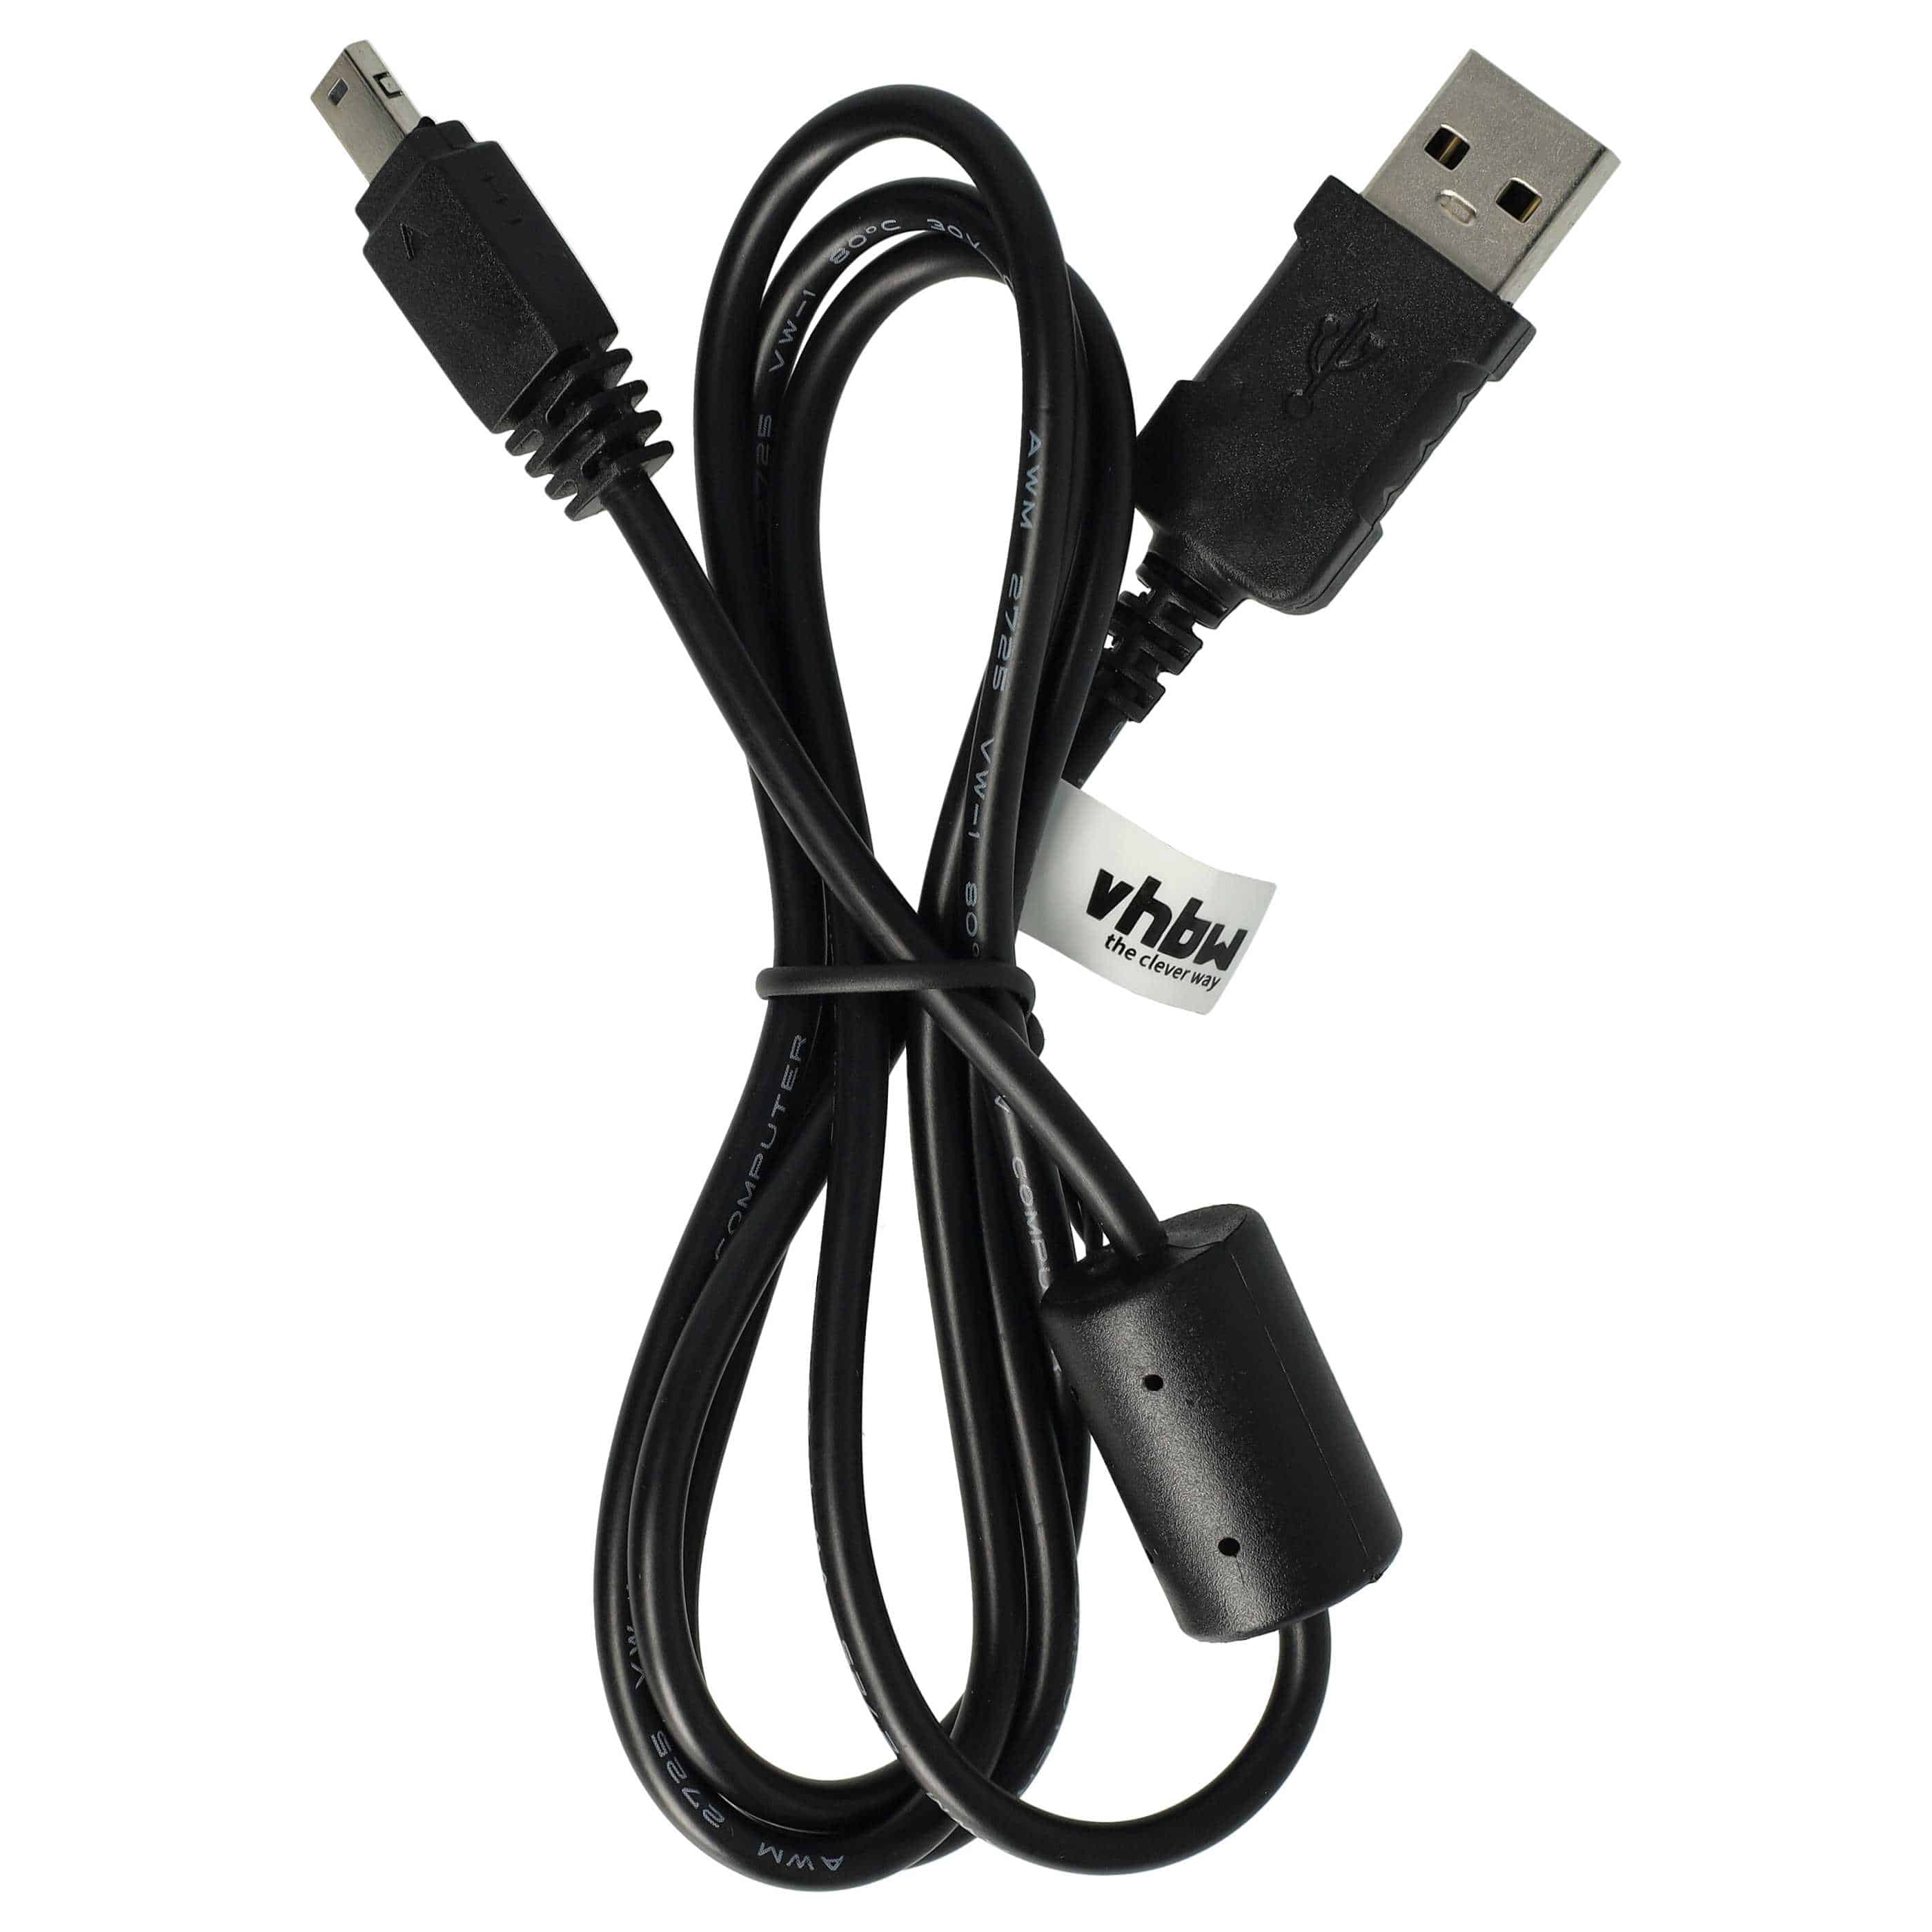 Cable de datos USB reemplaza Casio U-8, EMC-6U, EMC-6 para cámaras Casio - 100 cm